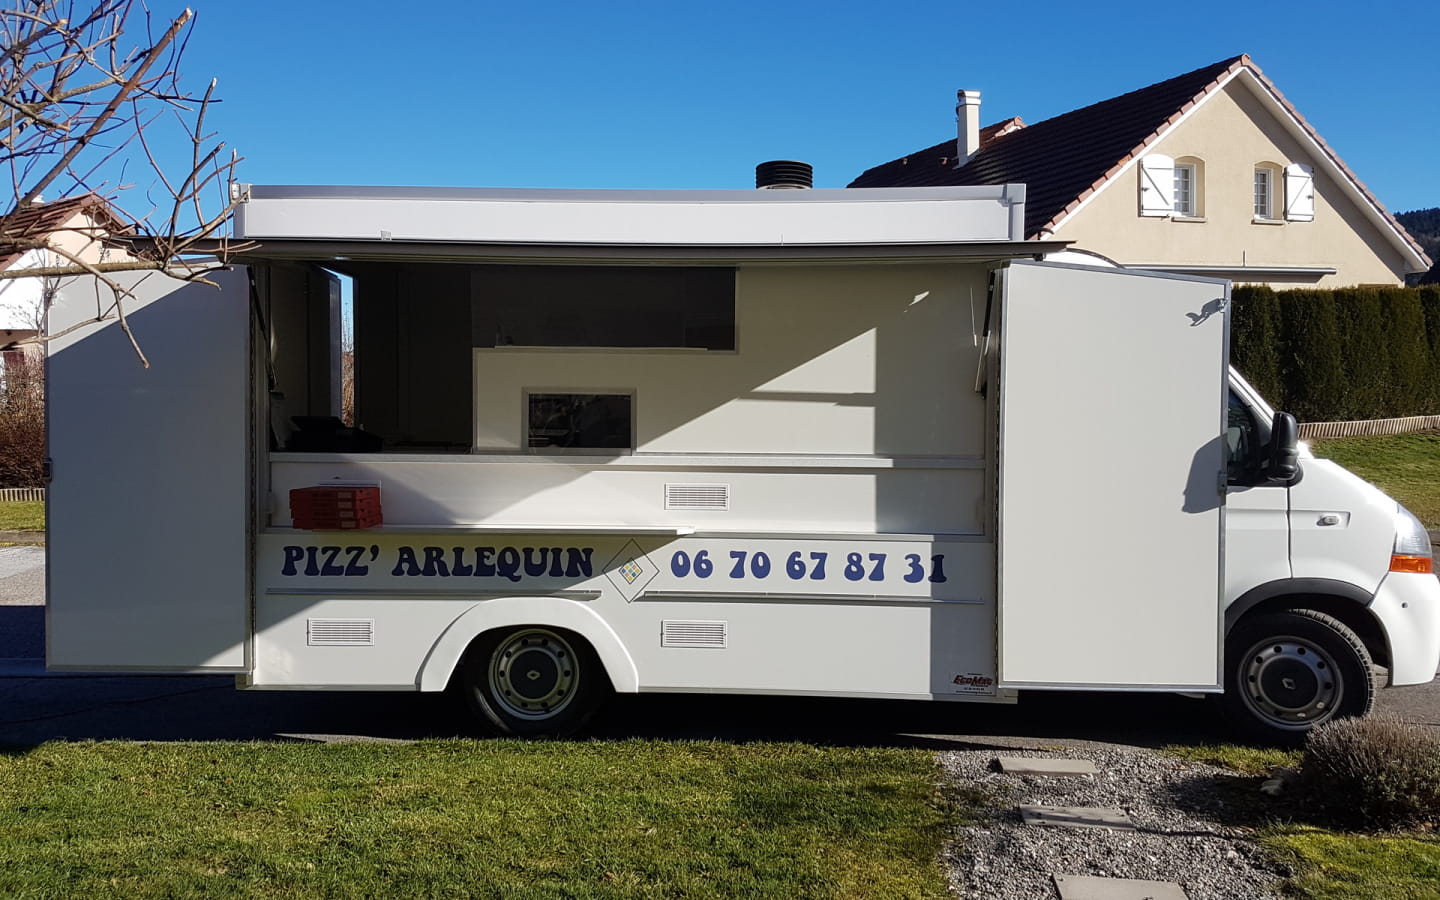 Food Truck - Pizz'Arlequin